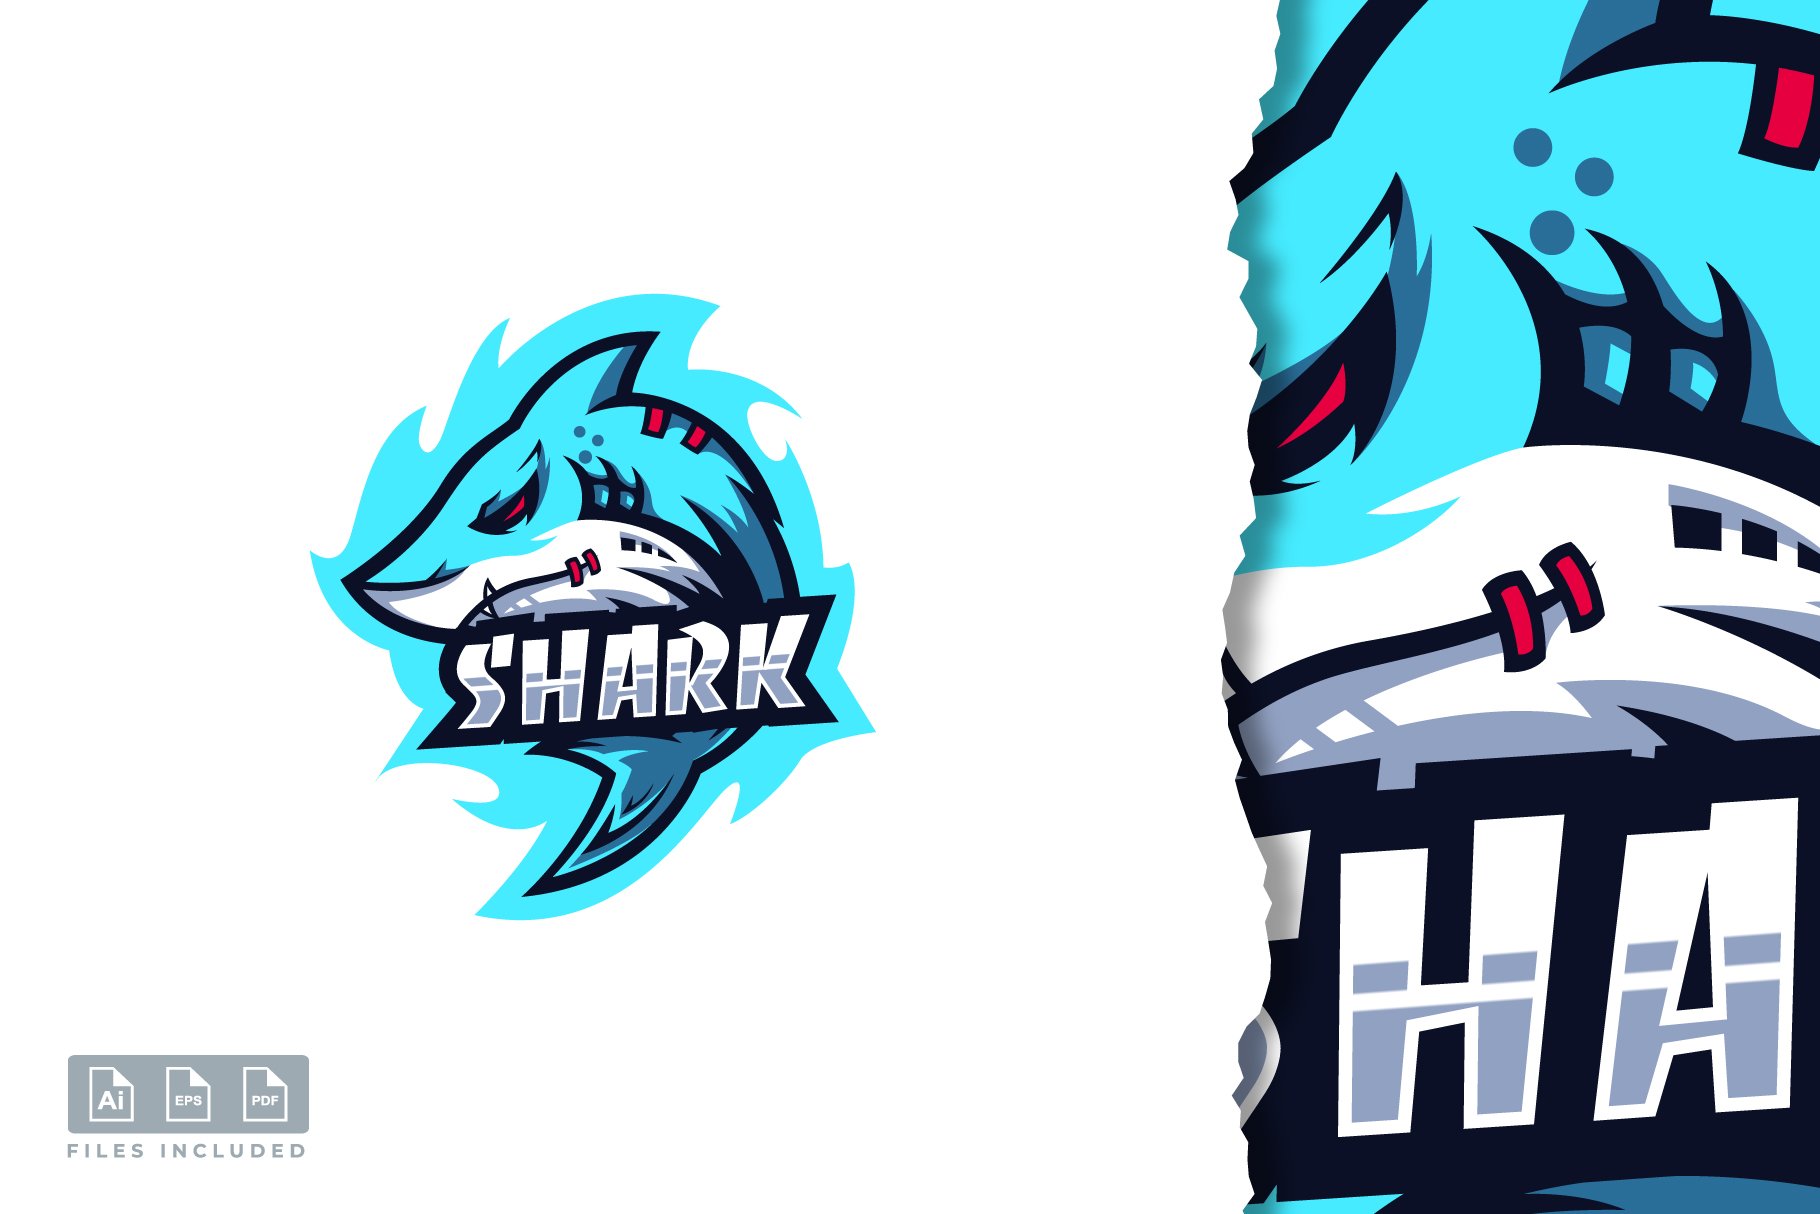 Shark logo design cover image.